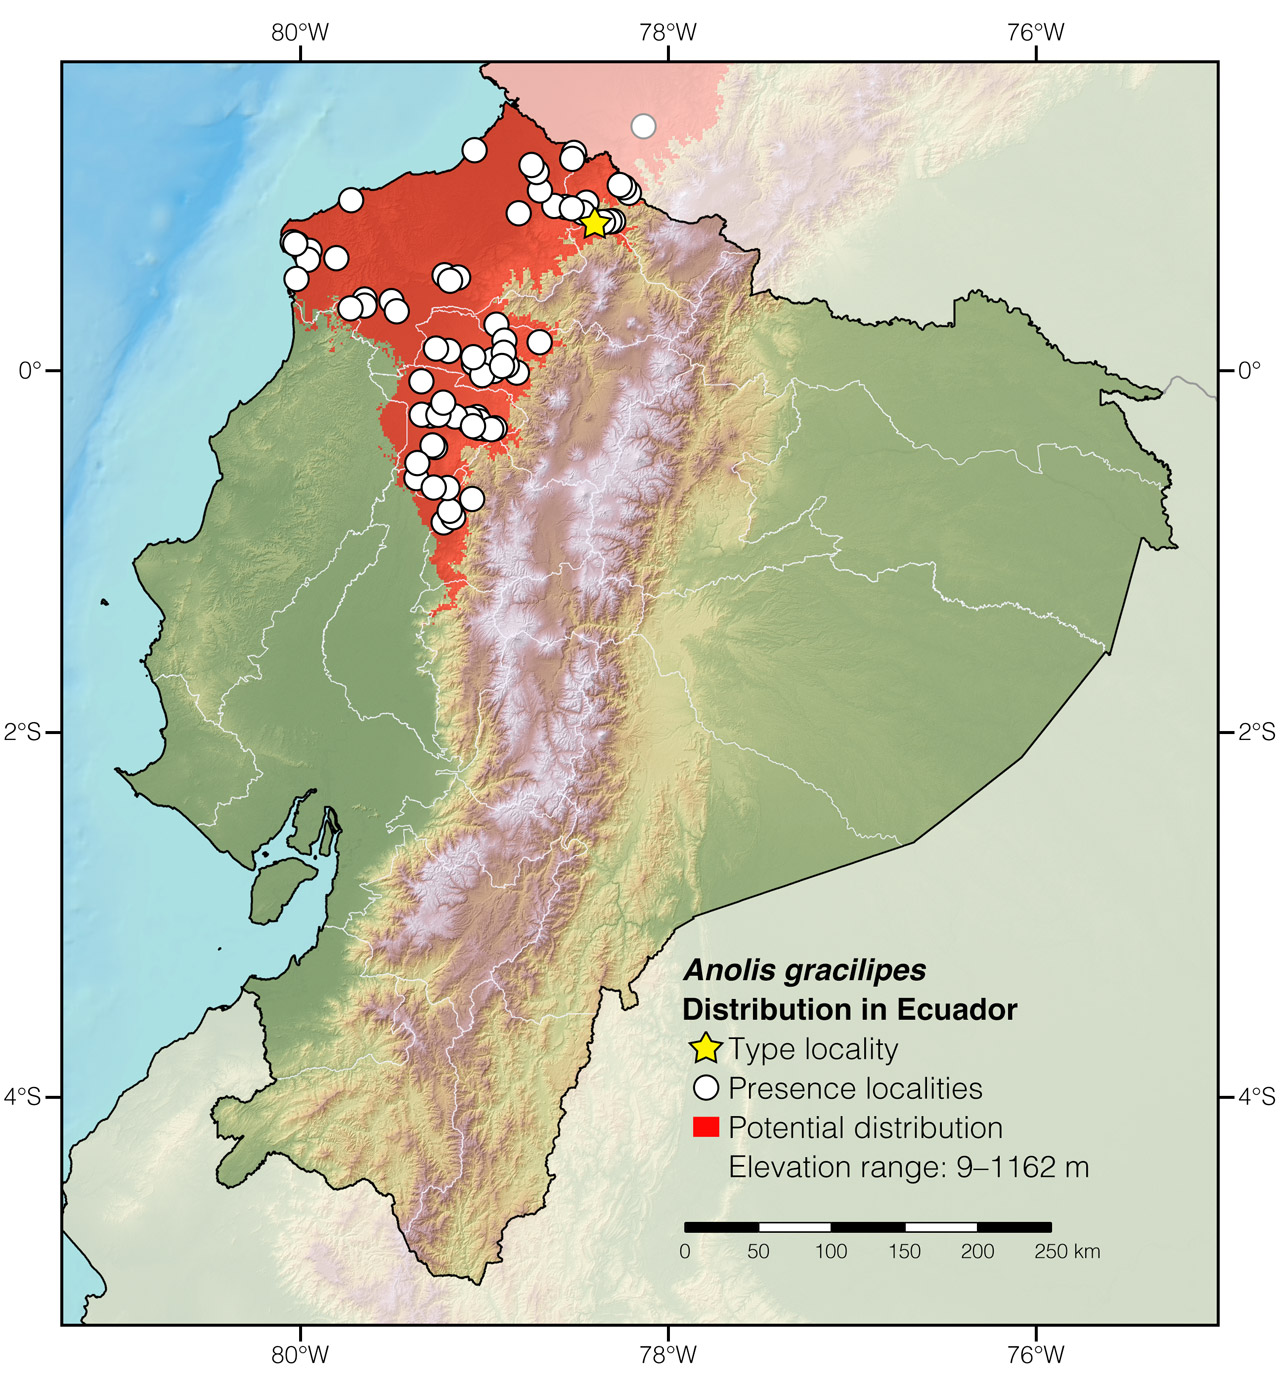 Distribution of Anolis gracilipes in Ecuador